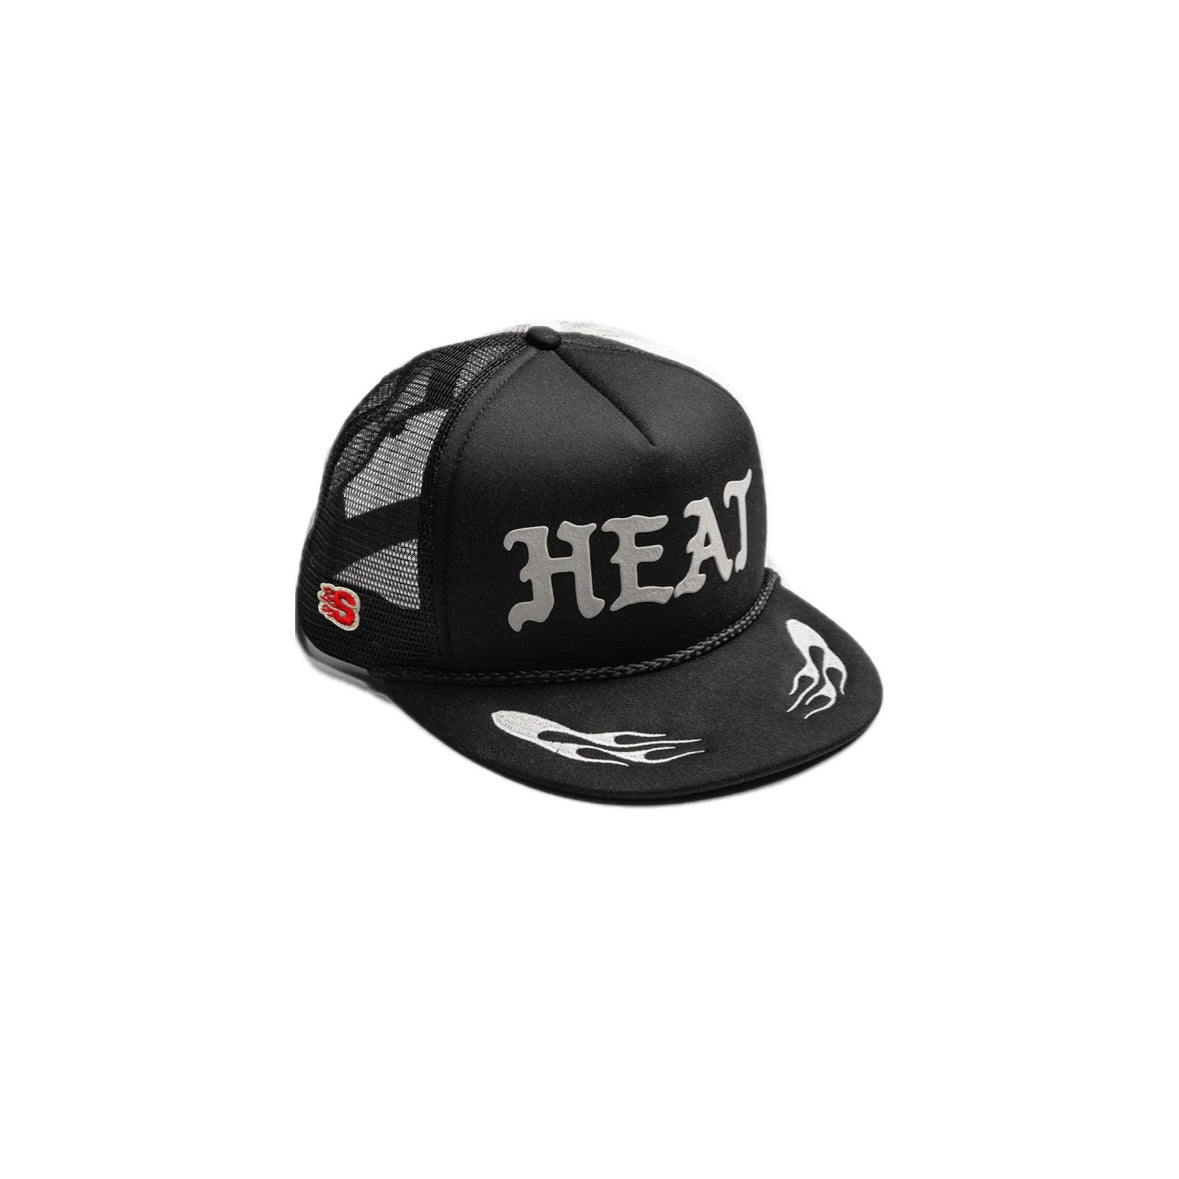 STRAYE HEAT BLACK CAP